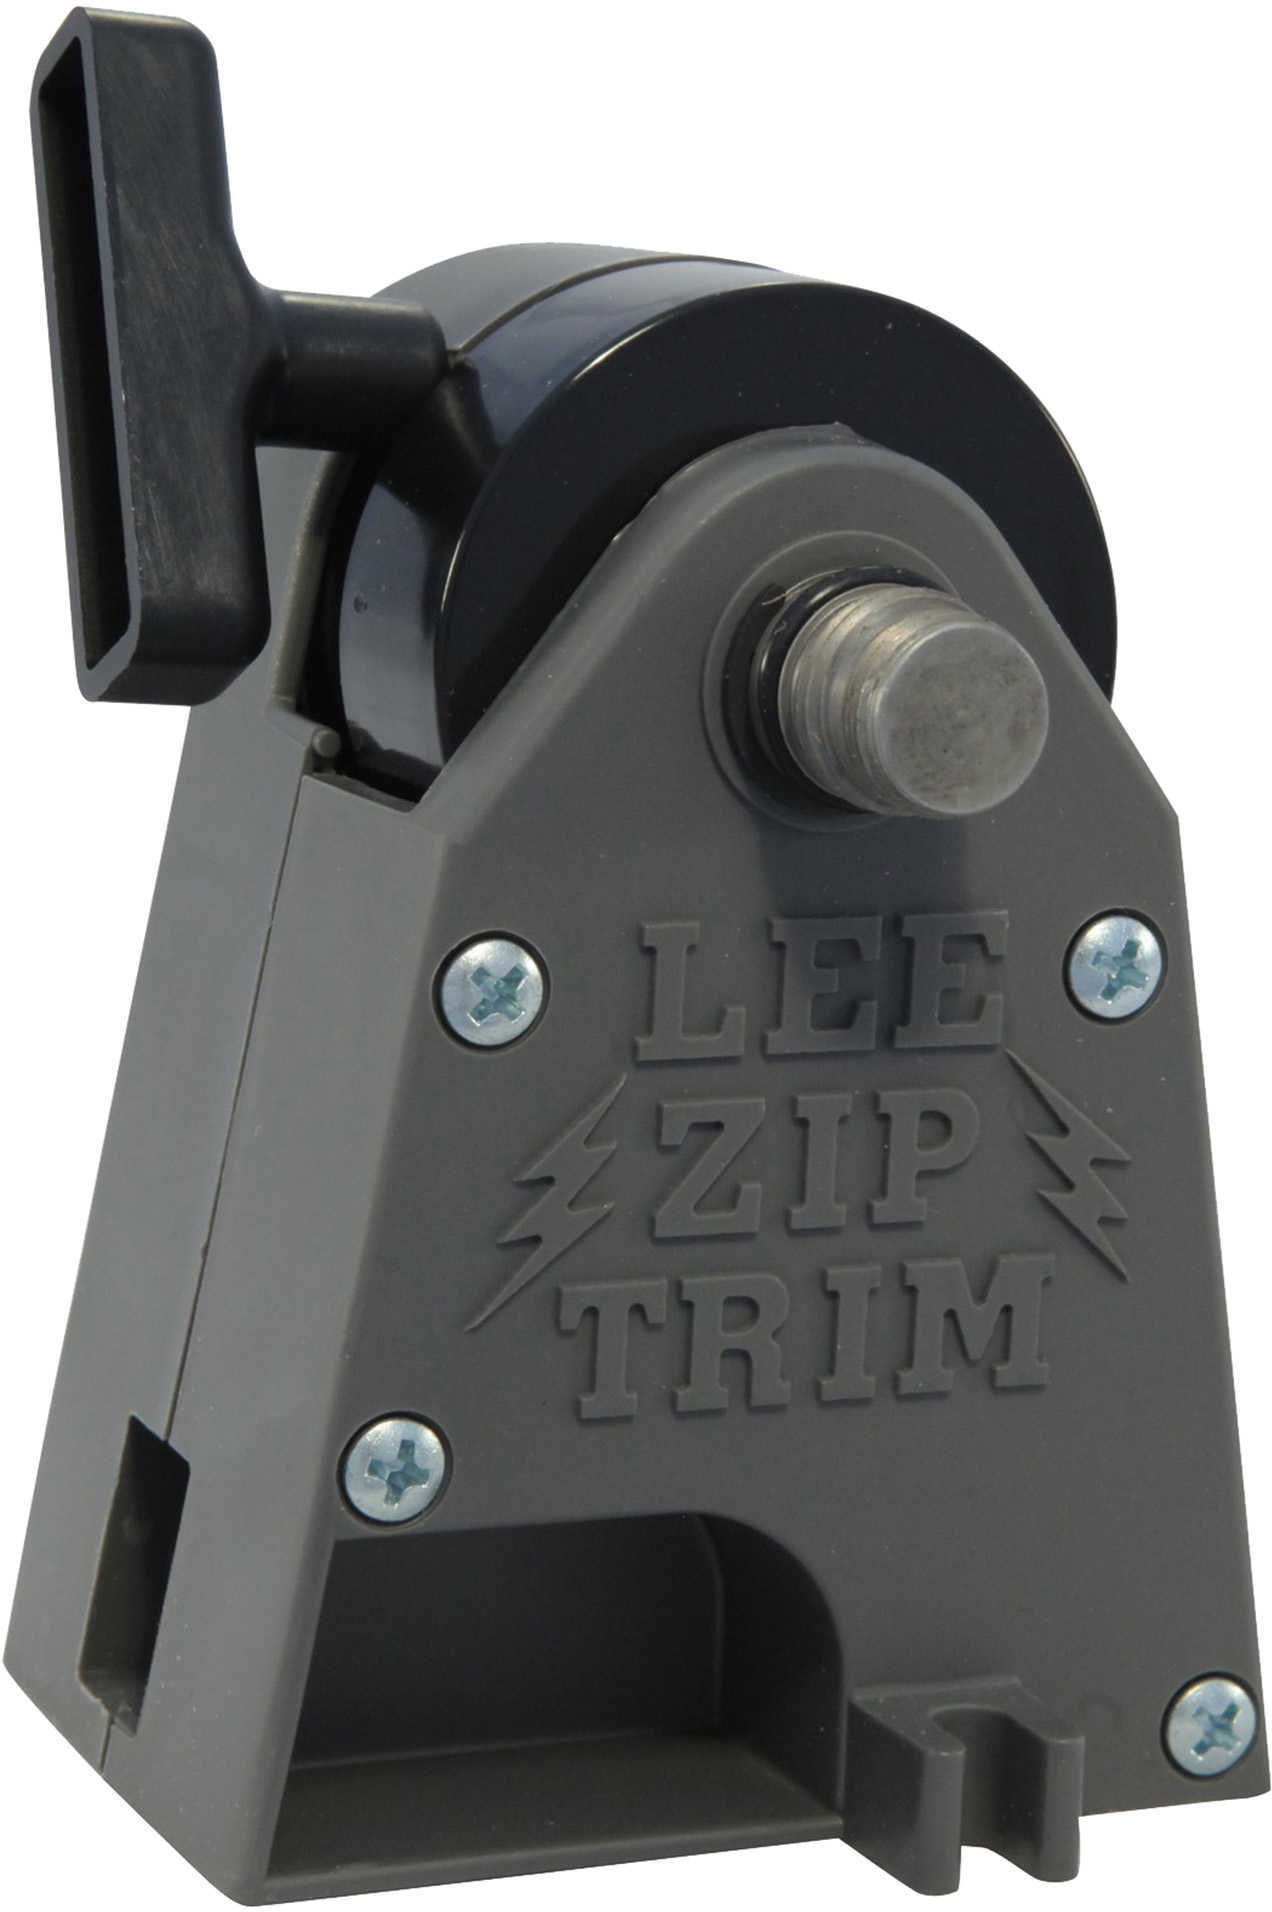 Lee Reloading Zip Trim Power Head